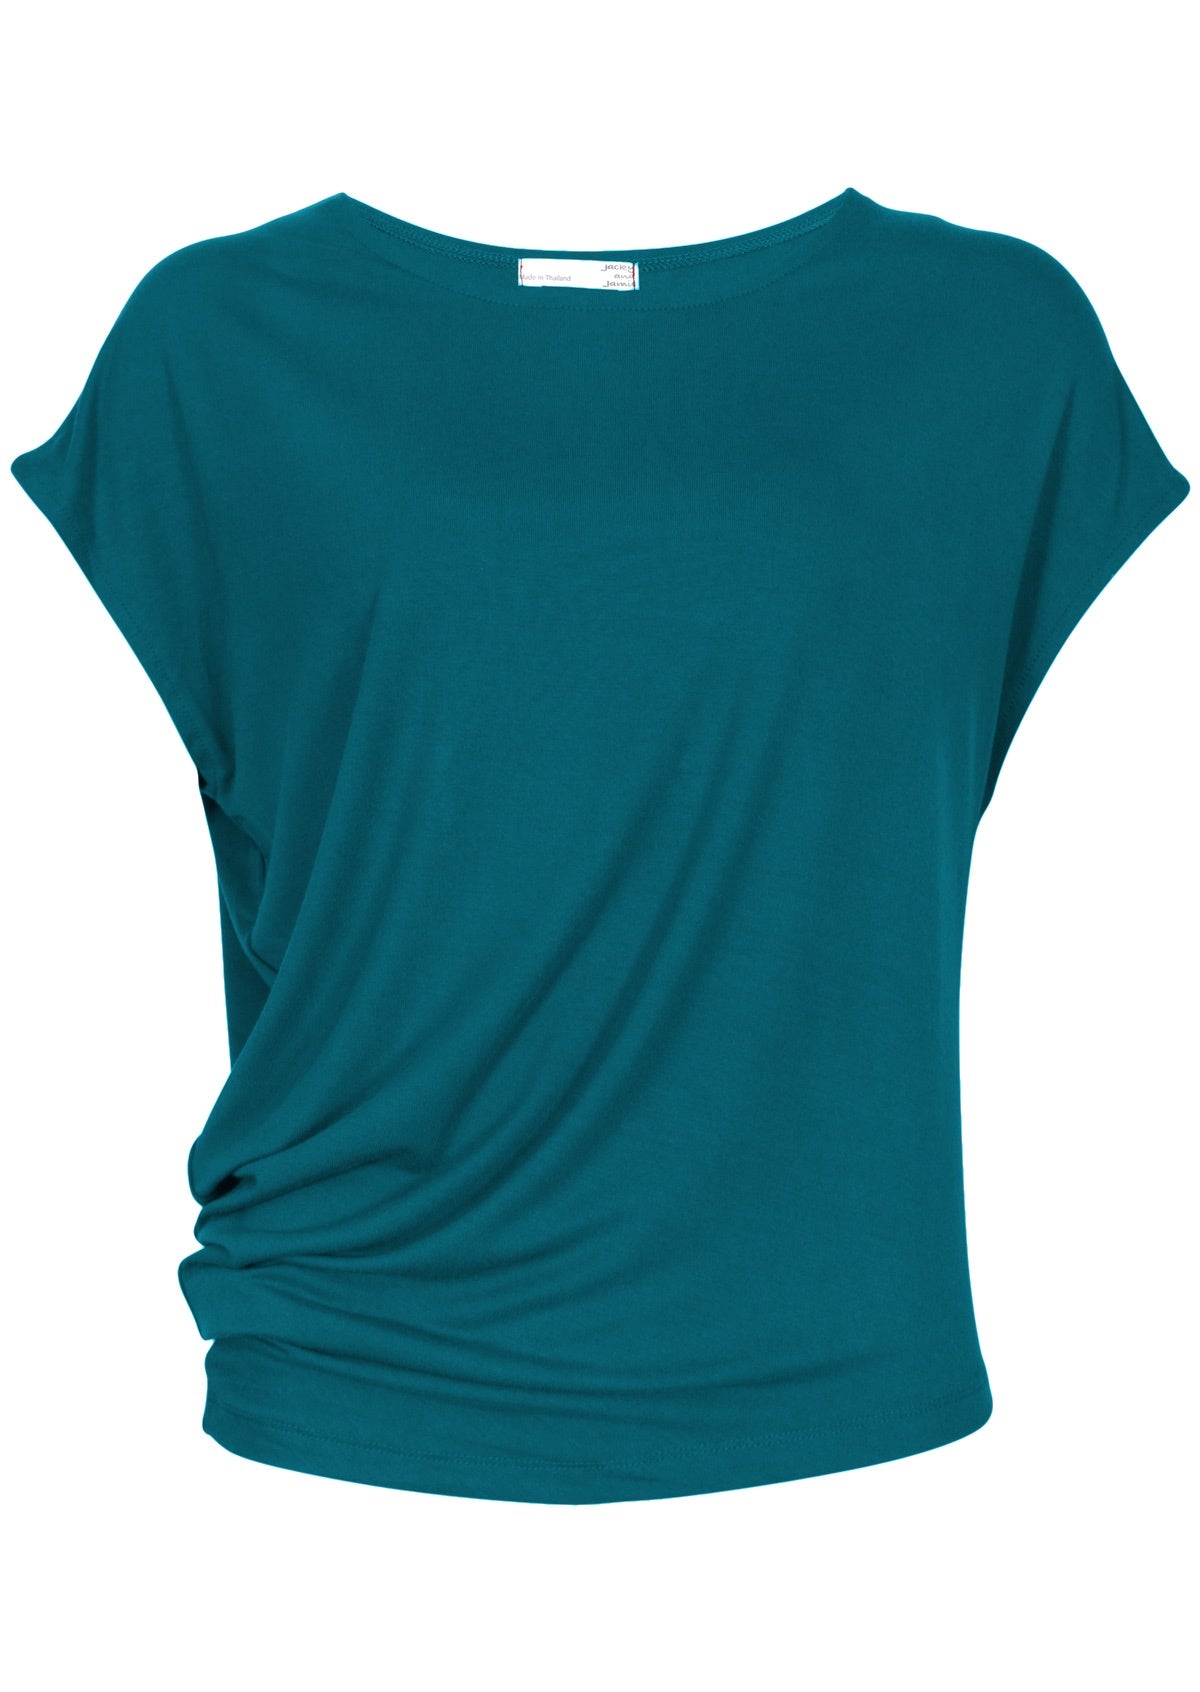 short sleeve teal women's top with asymmetrical hemline 